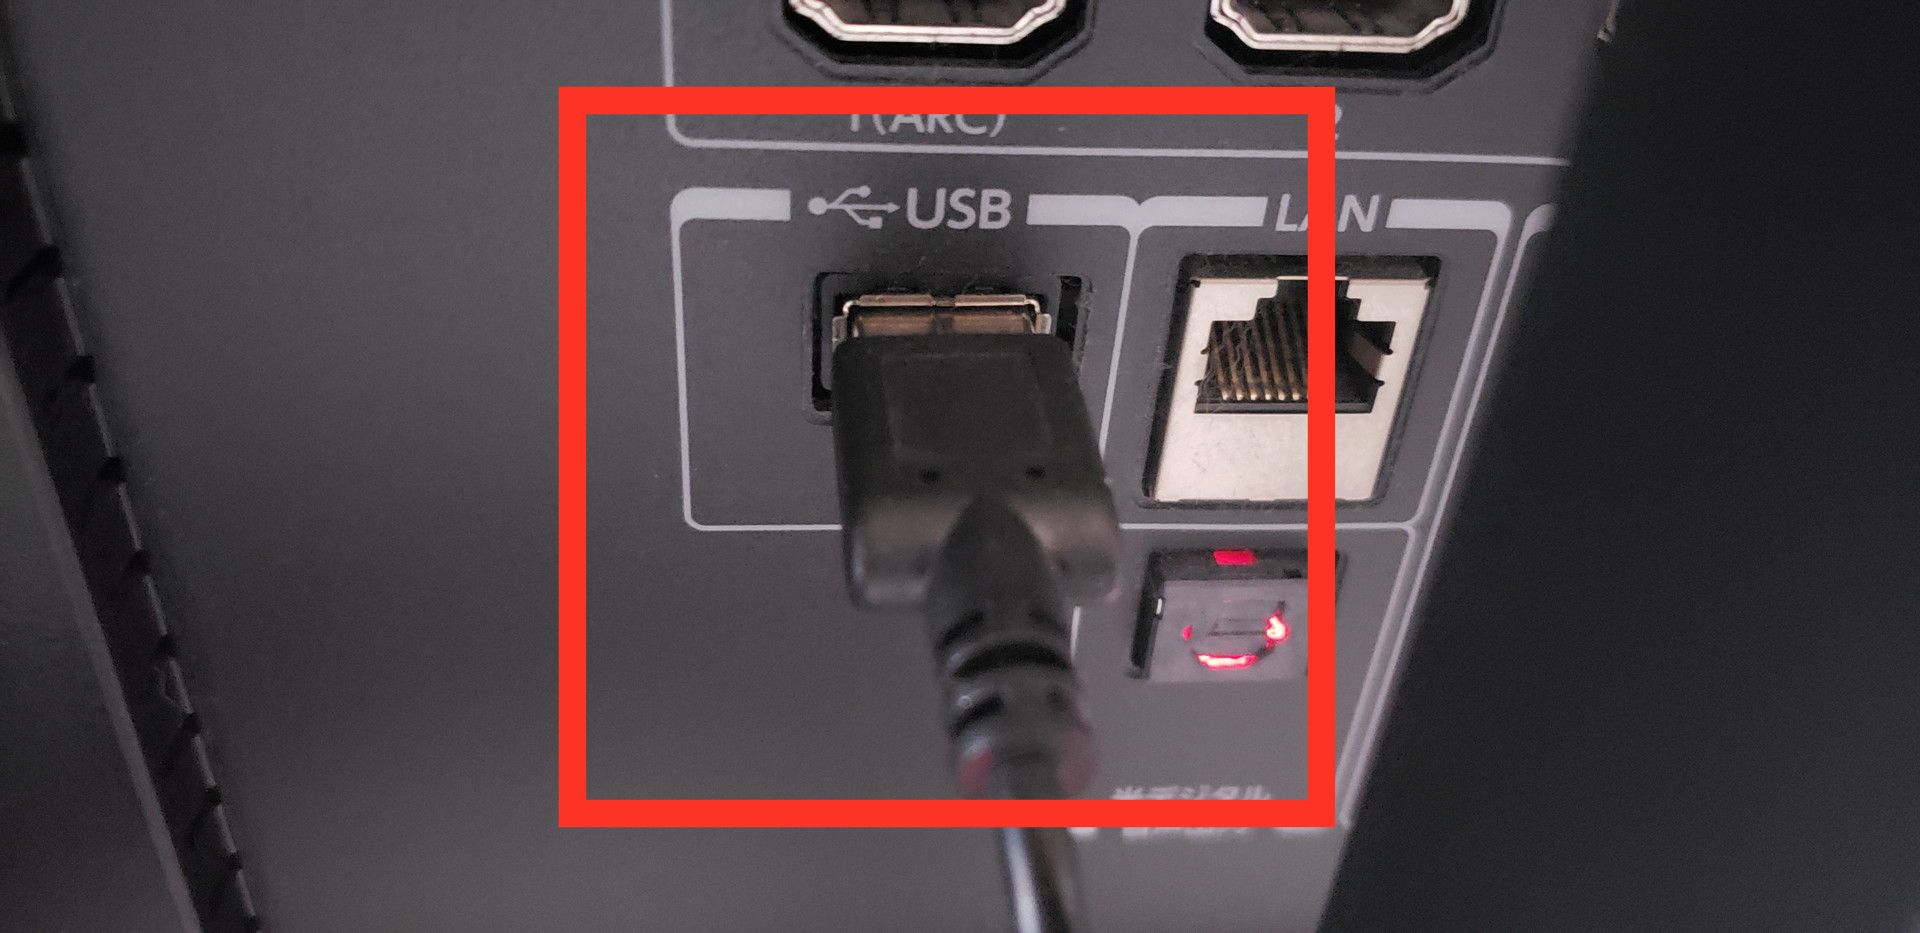 HDCZ-UTL4KC 外付けHDD 4TB USB3.1Gen1(USB3.0)